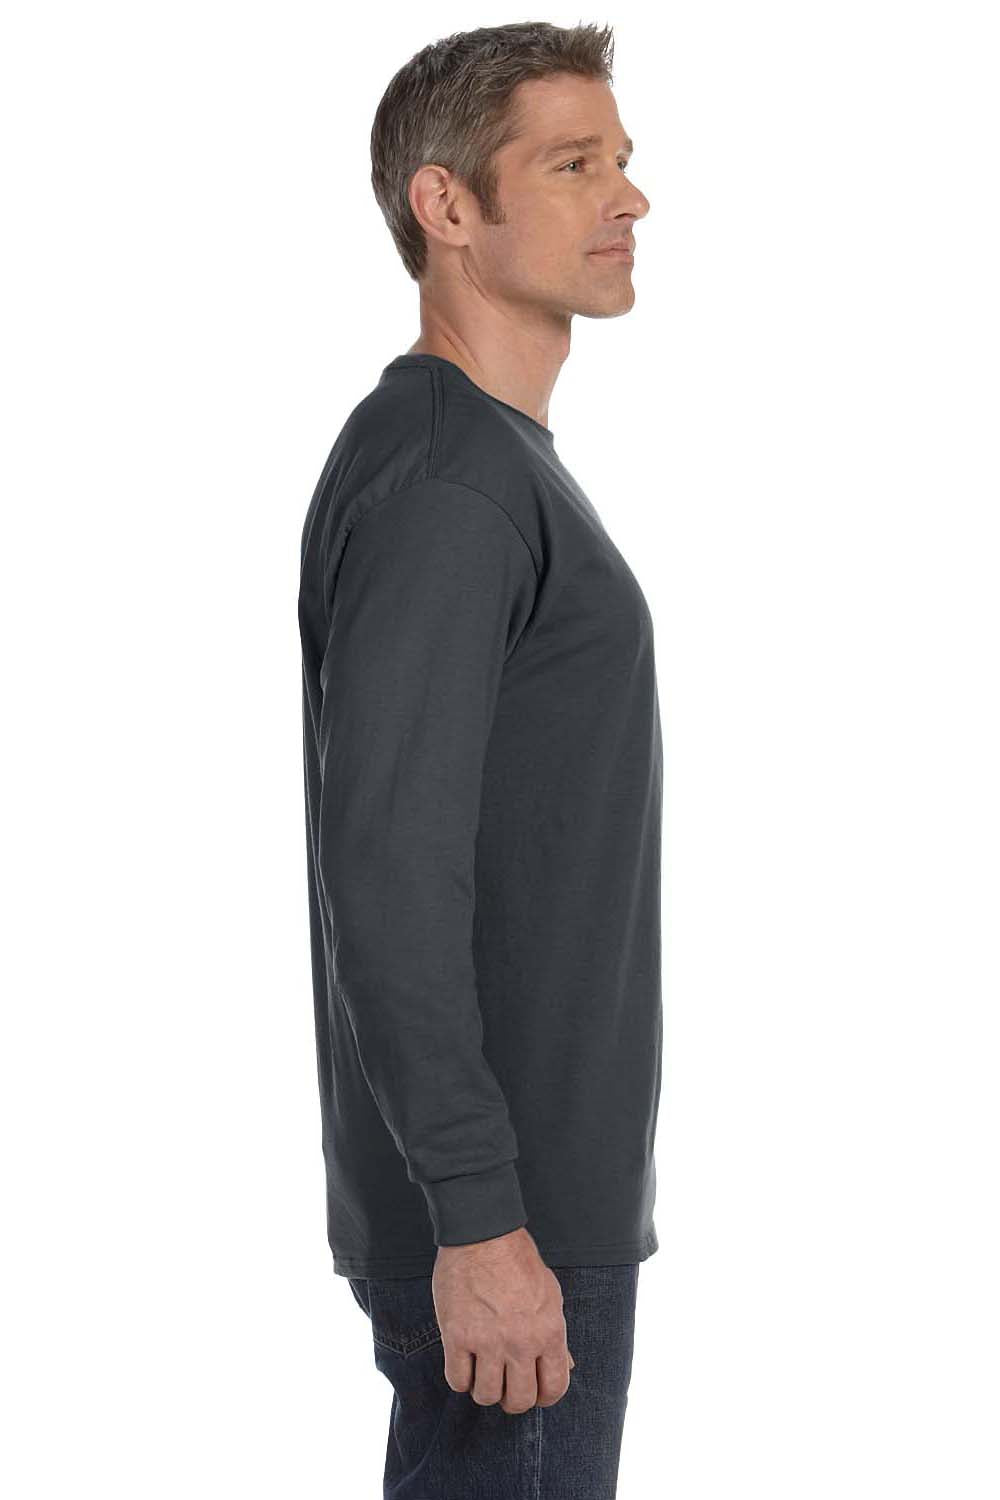 Jerzees 29L Mens Dri-Power Moisture Wicking Long Sleeve Crewneck T-Shirt Charcoal Grey Side